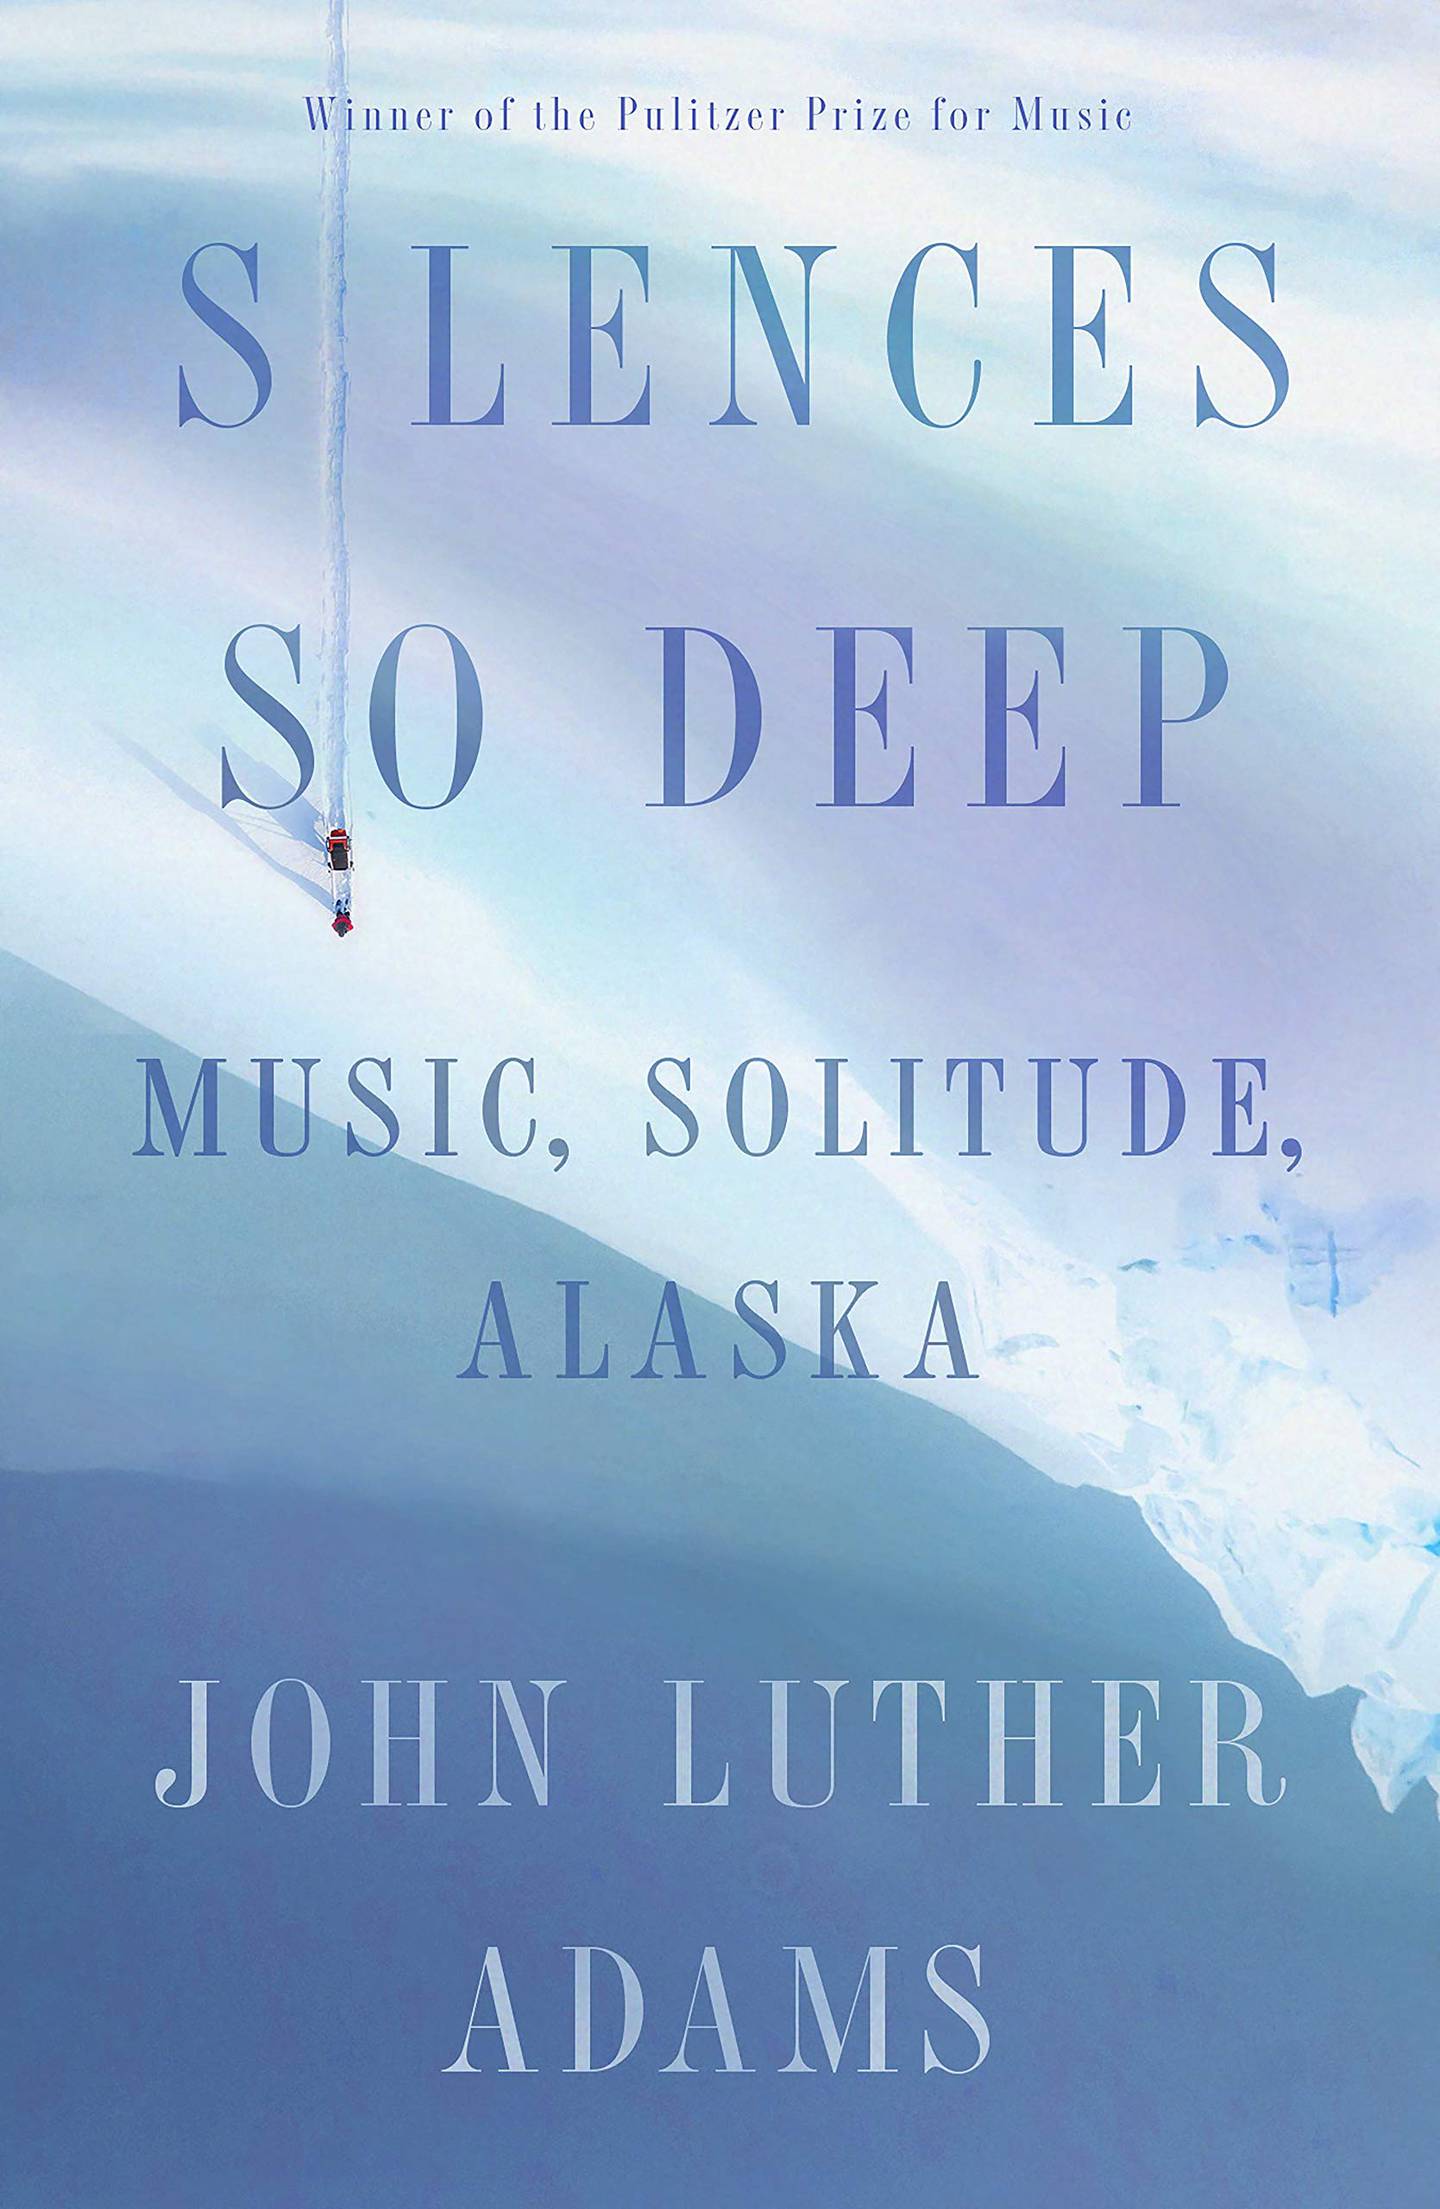 "Silences So Deep: Music, Solitude, Alaska," by John Luther Adams